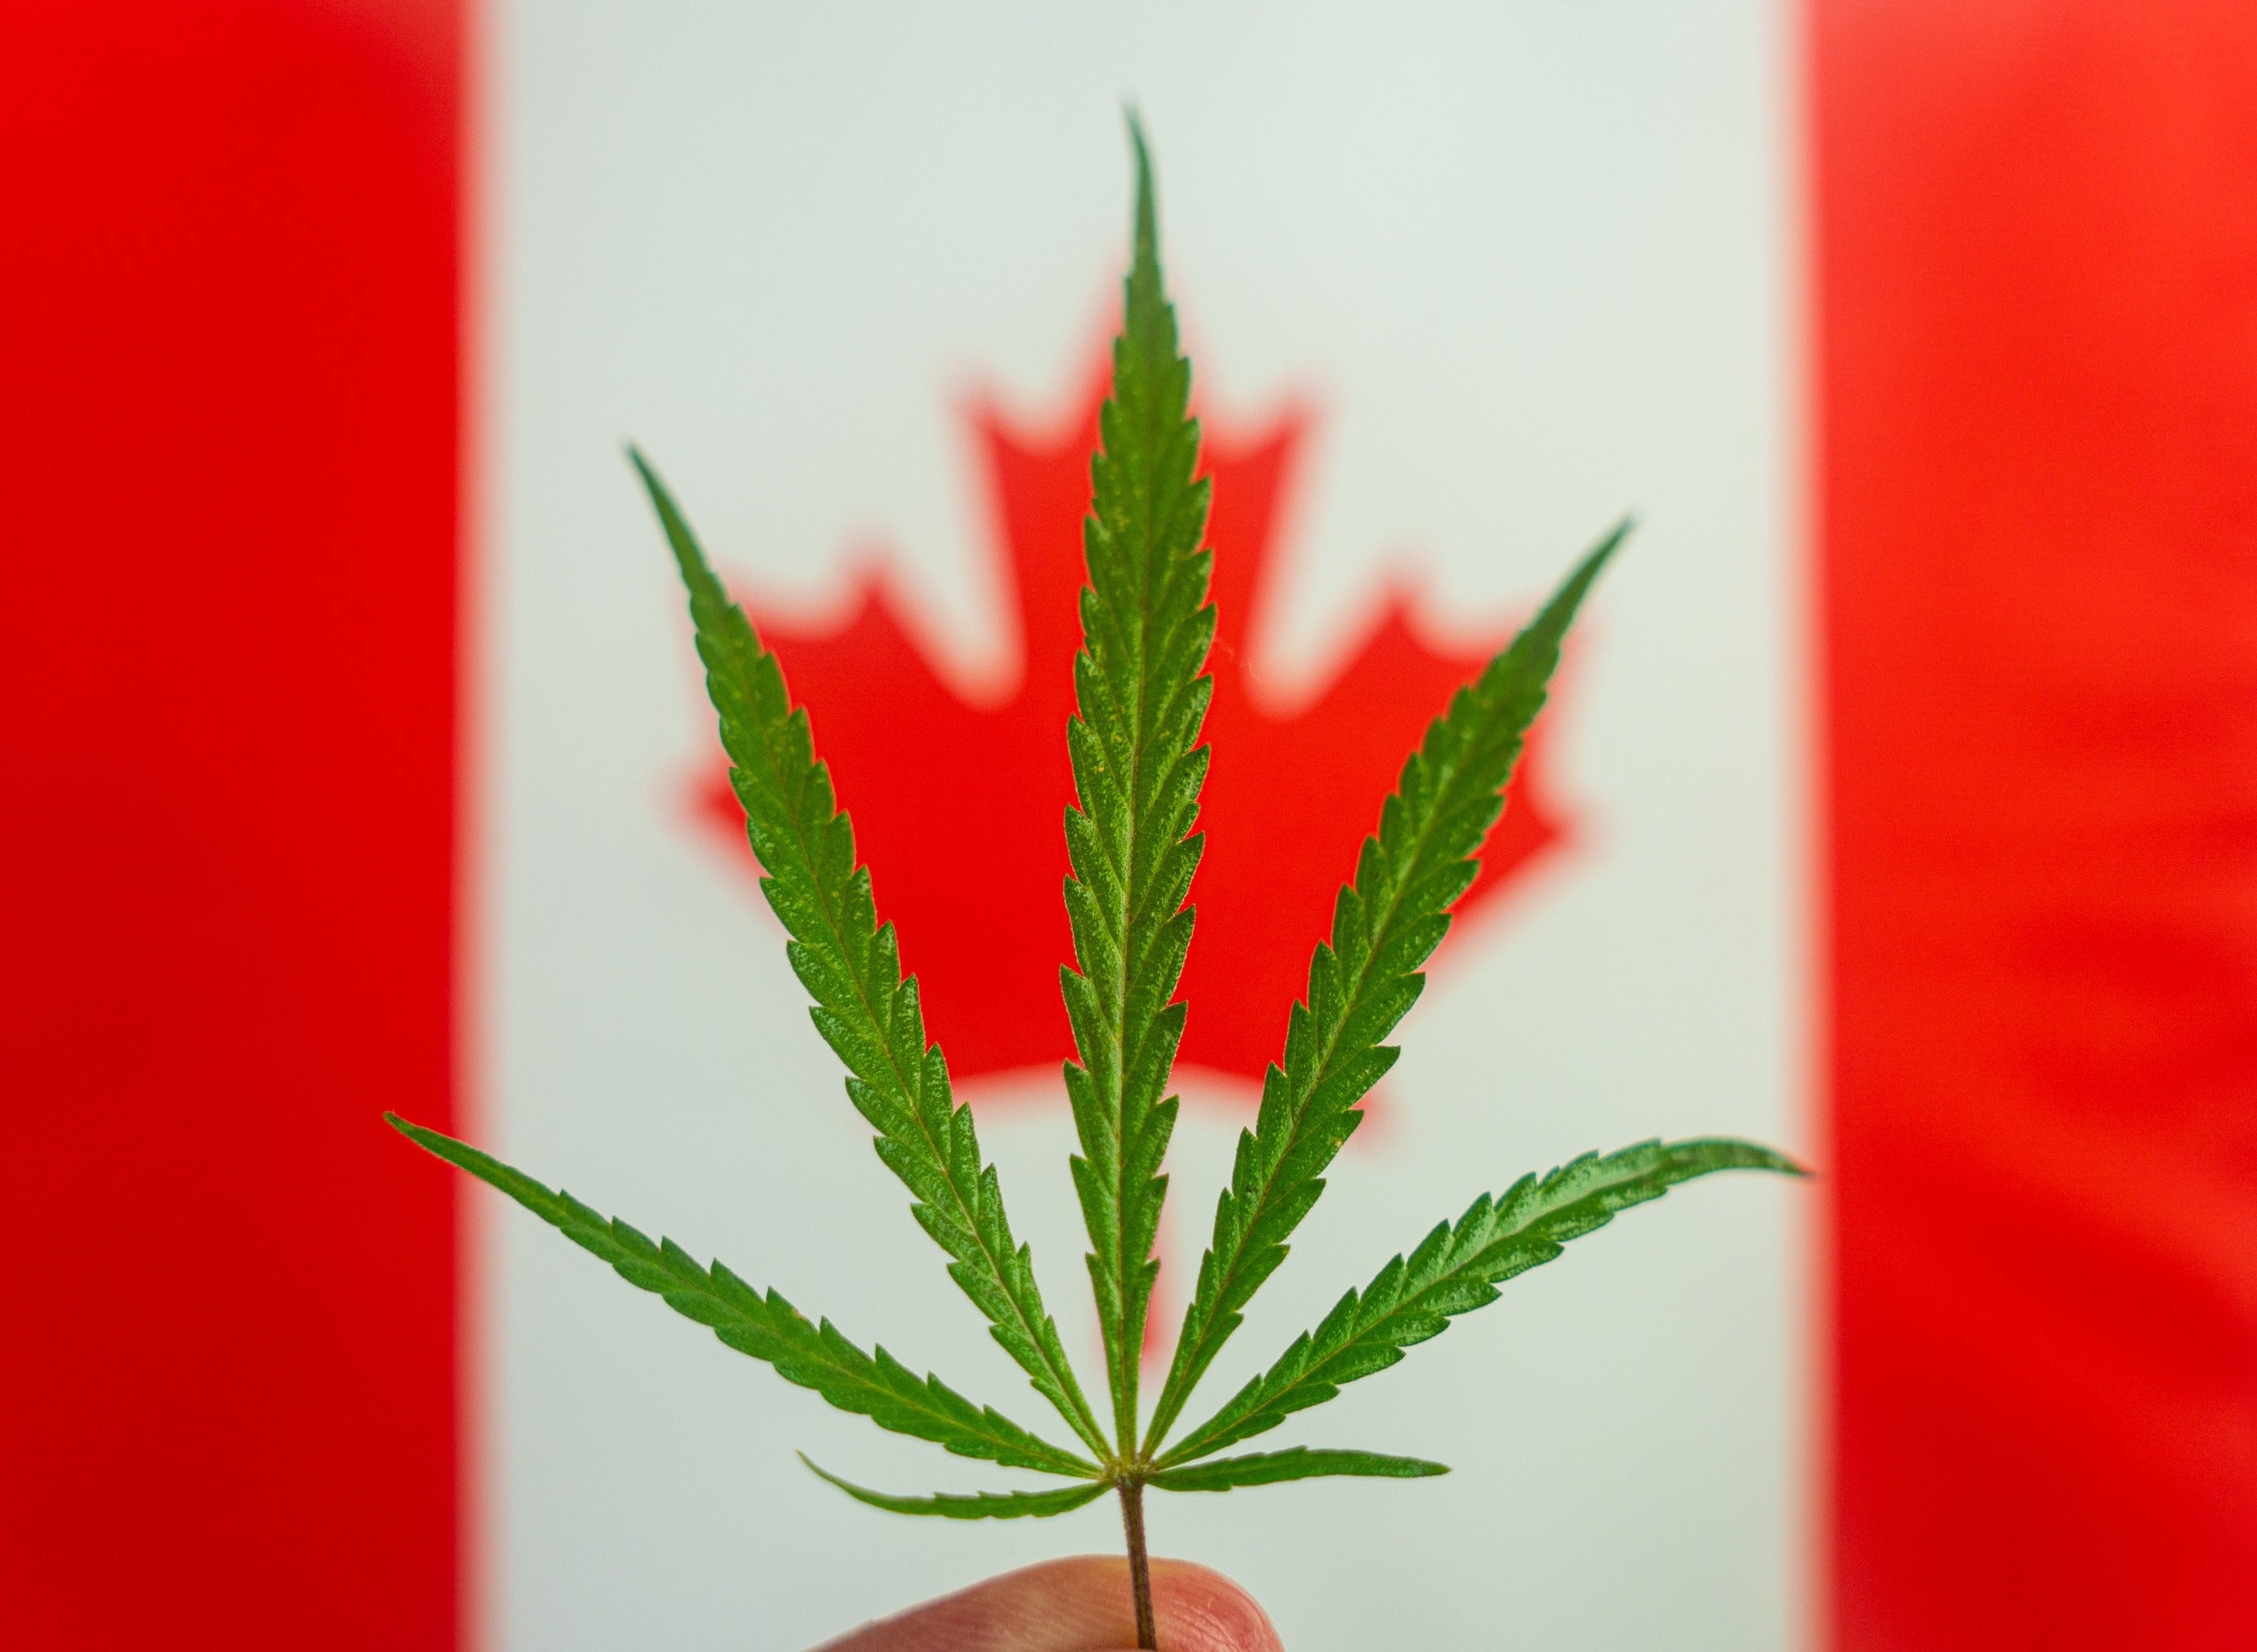 Canadian Cannabis Sector Faces Unprecedented License Withdrawals Amid Market Struggles - Marijuana Packaging